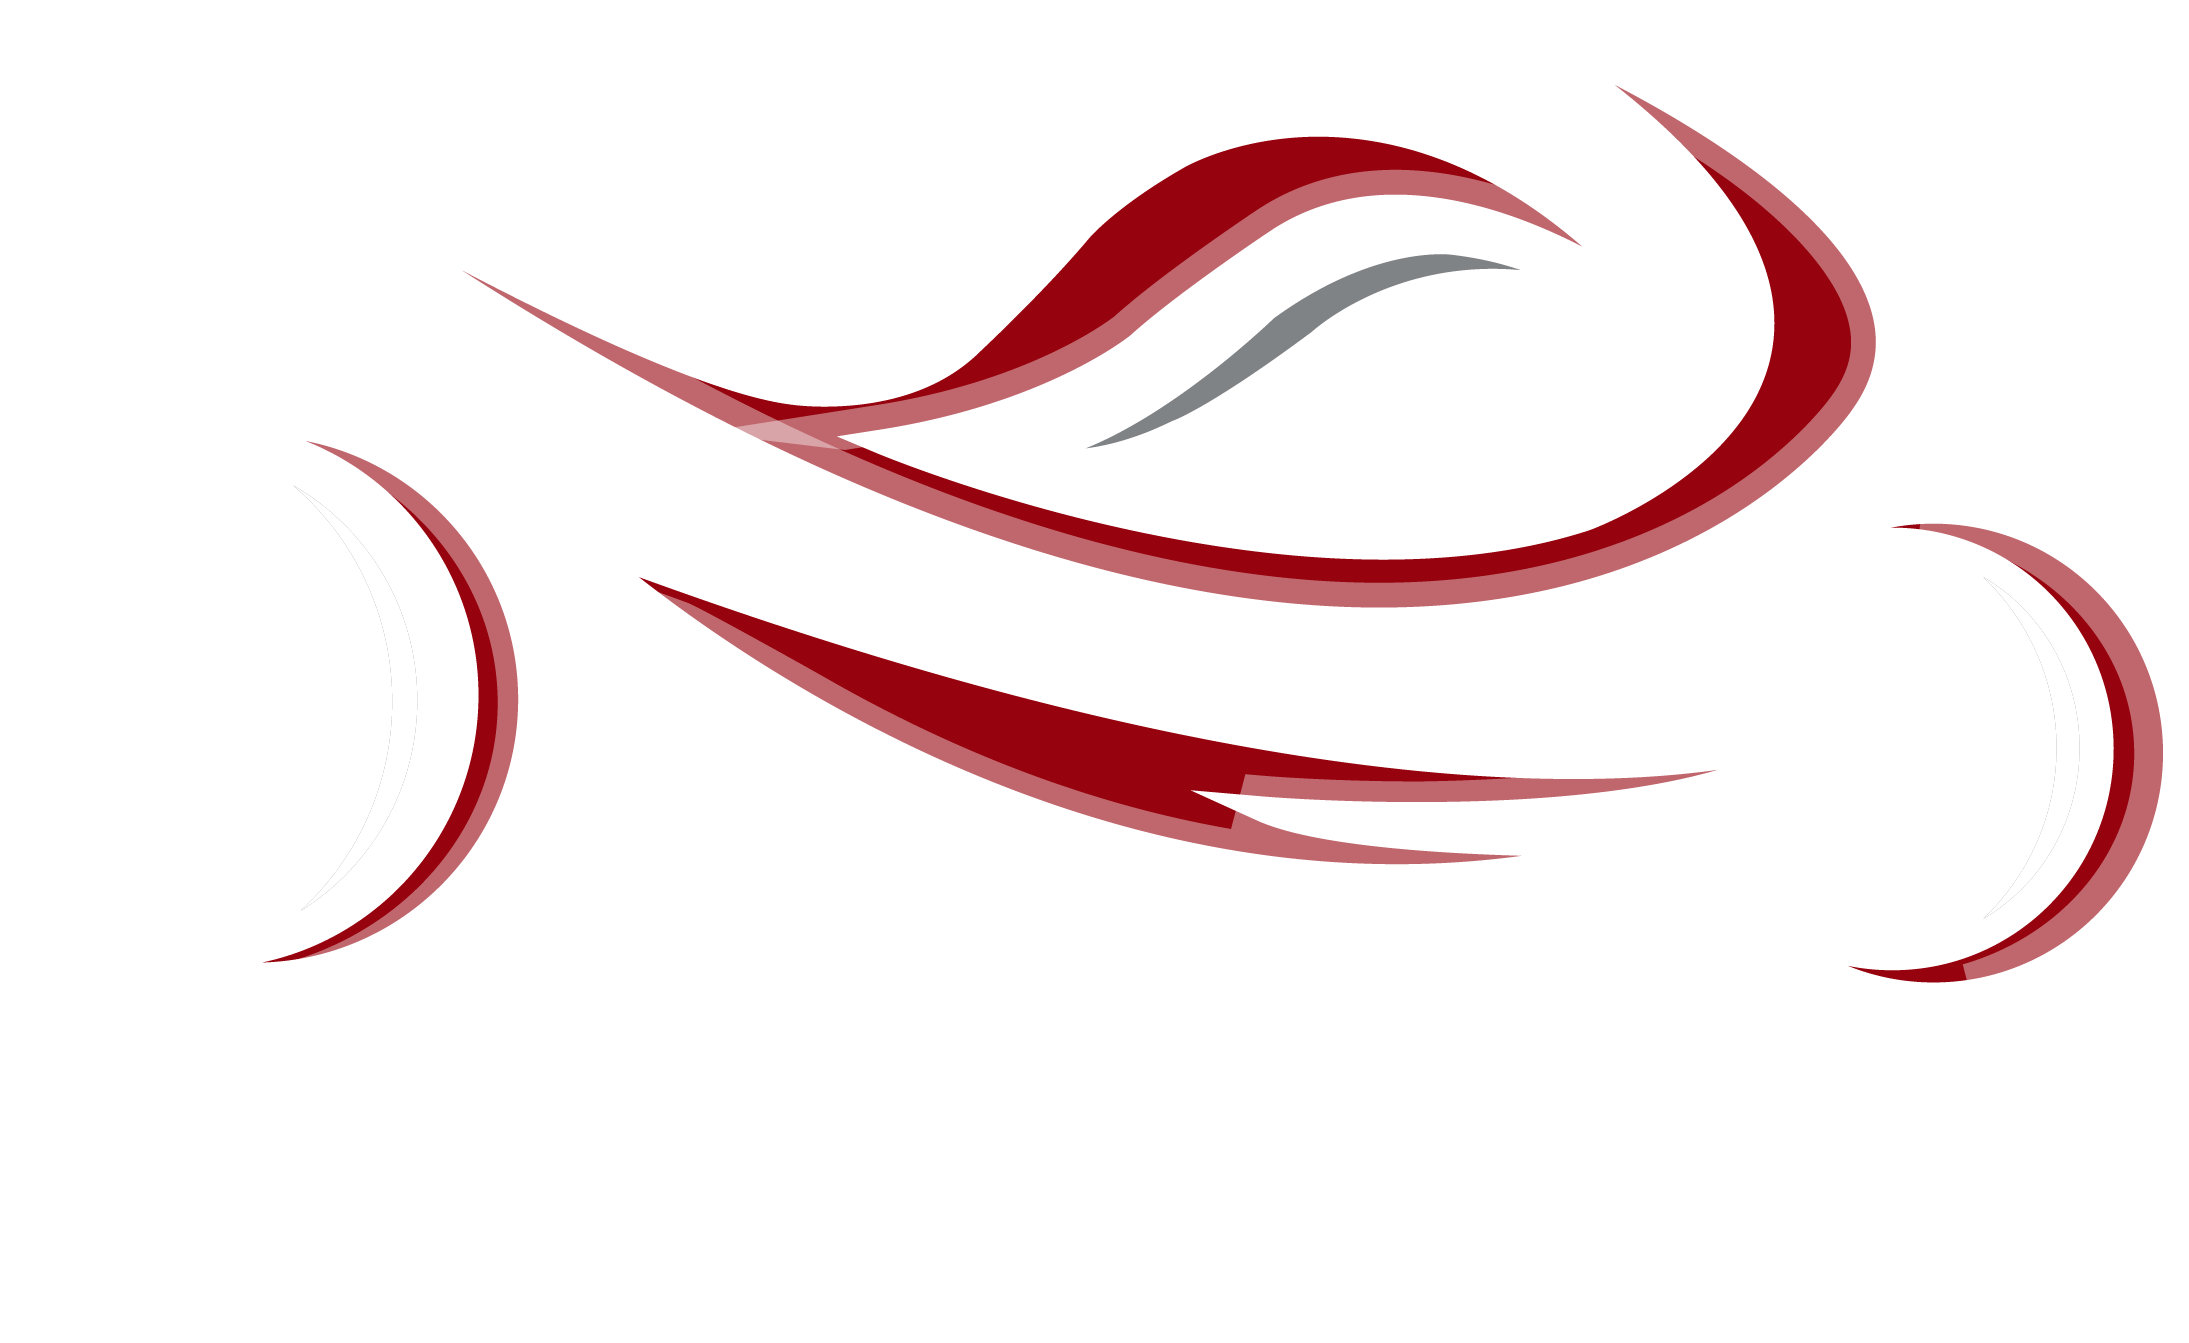 Motorentclub